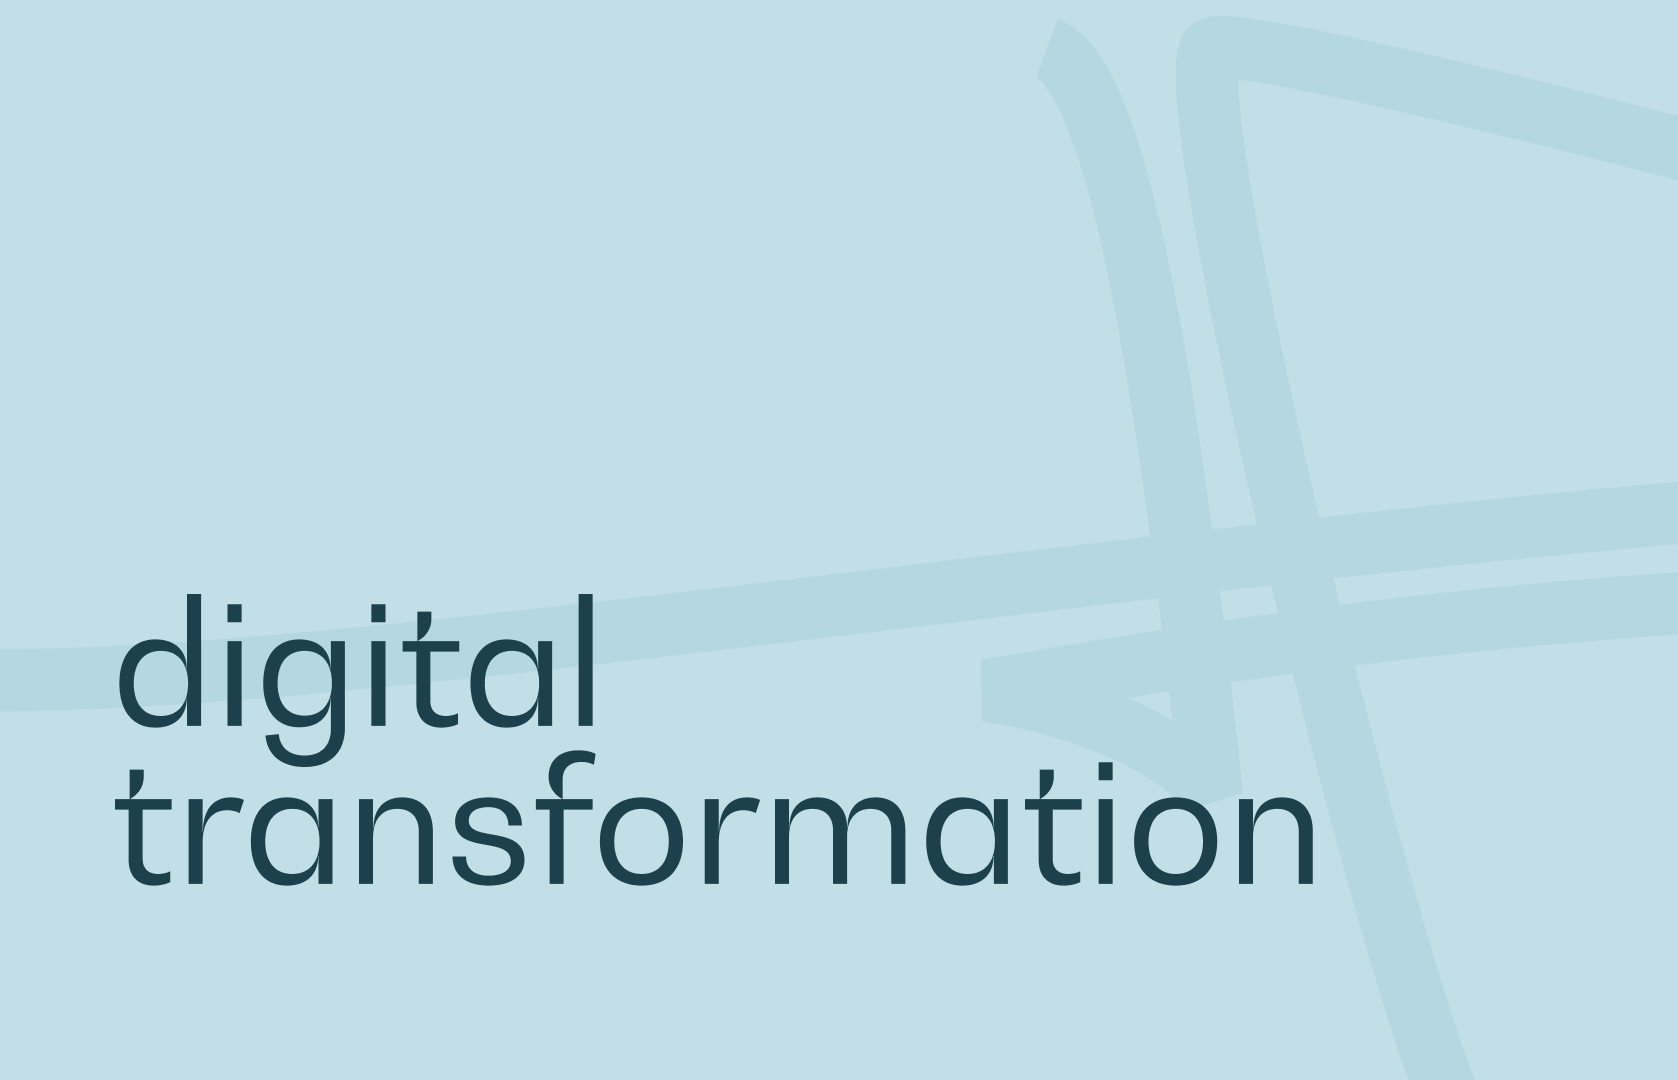 Digital transformation definition